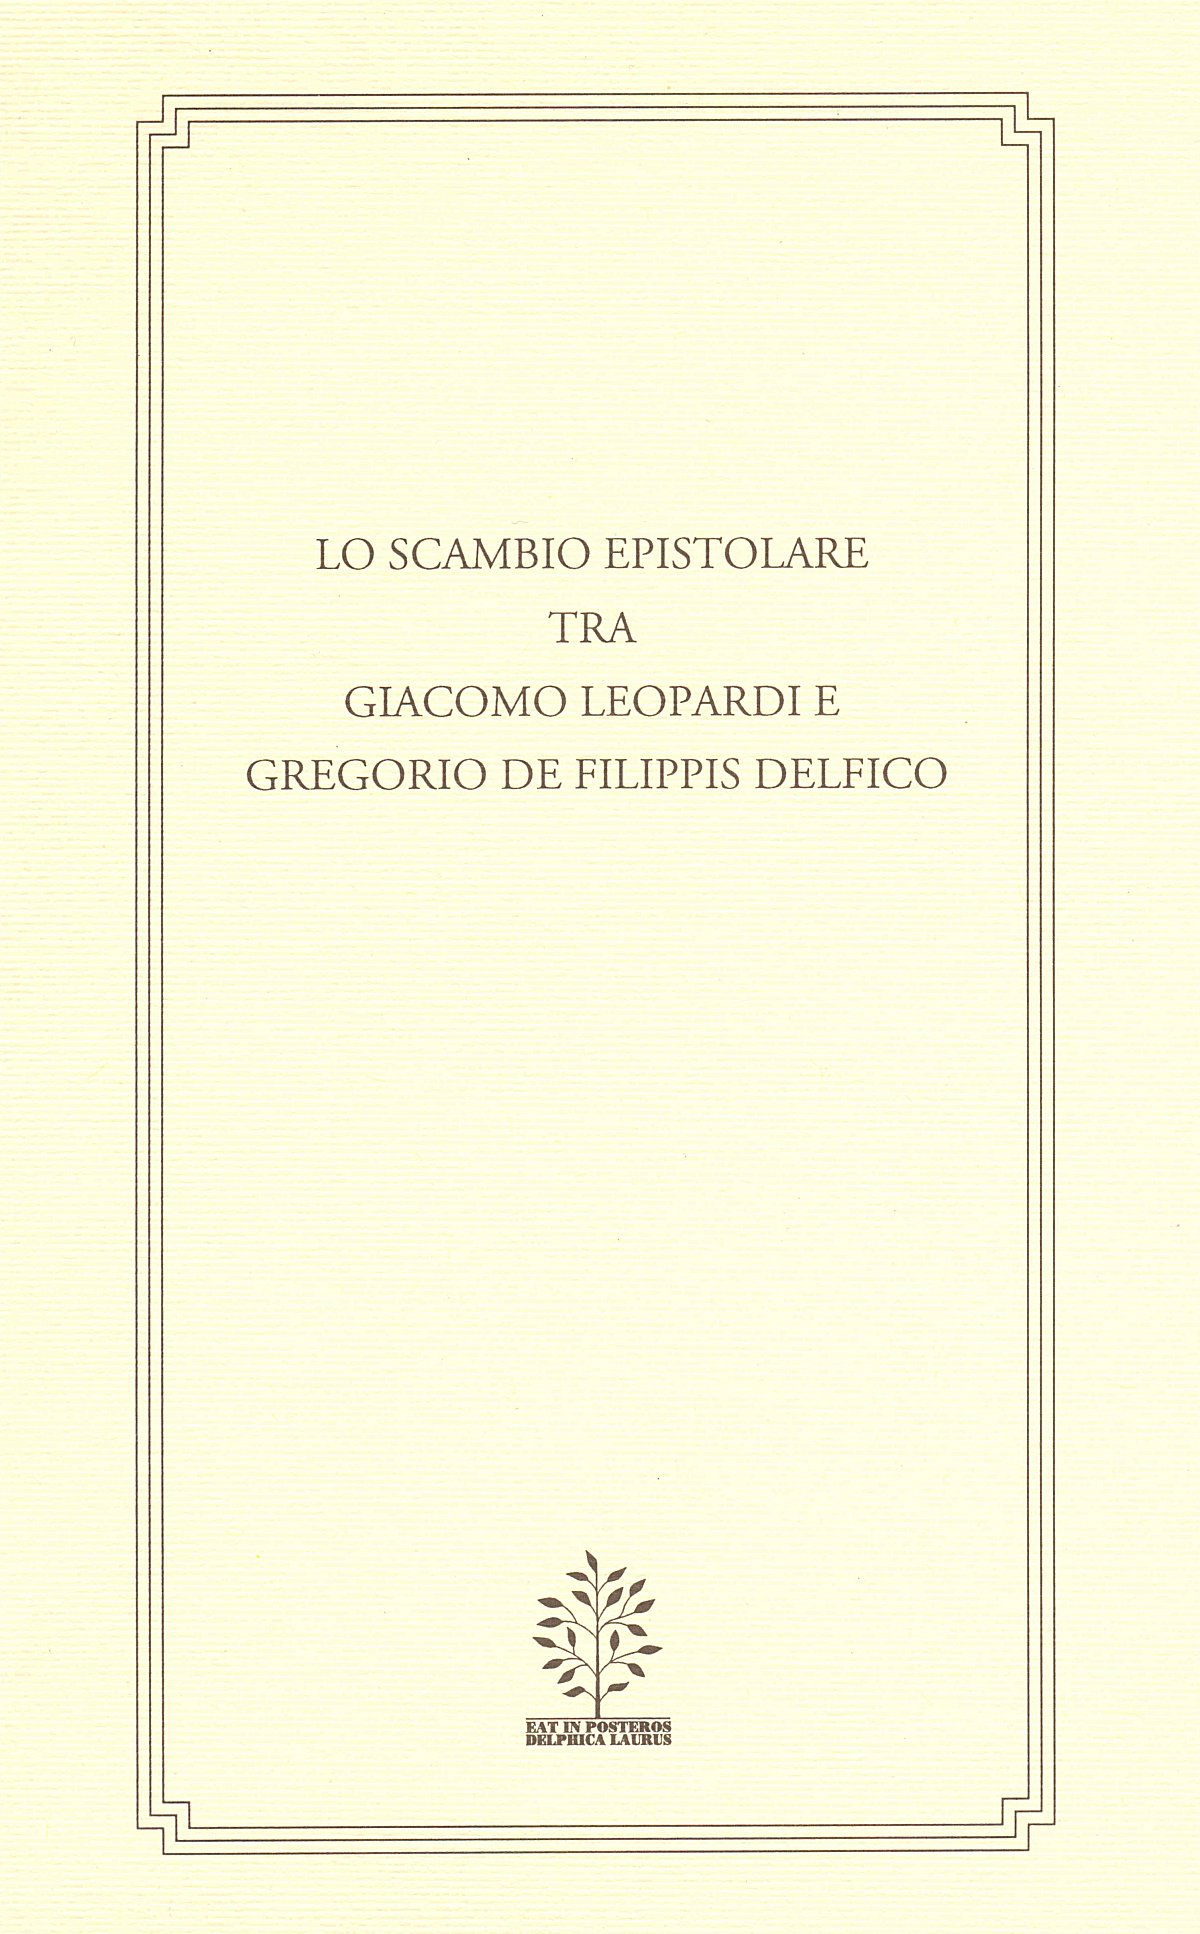 "Lo scambio epistolare tra Giacomo Leopardi e Gregorio De Filippis Delfico"